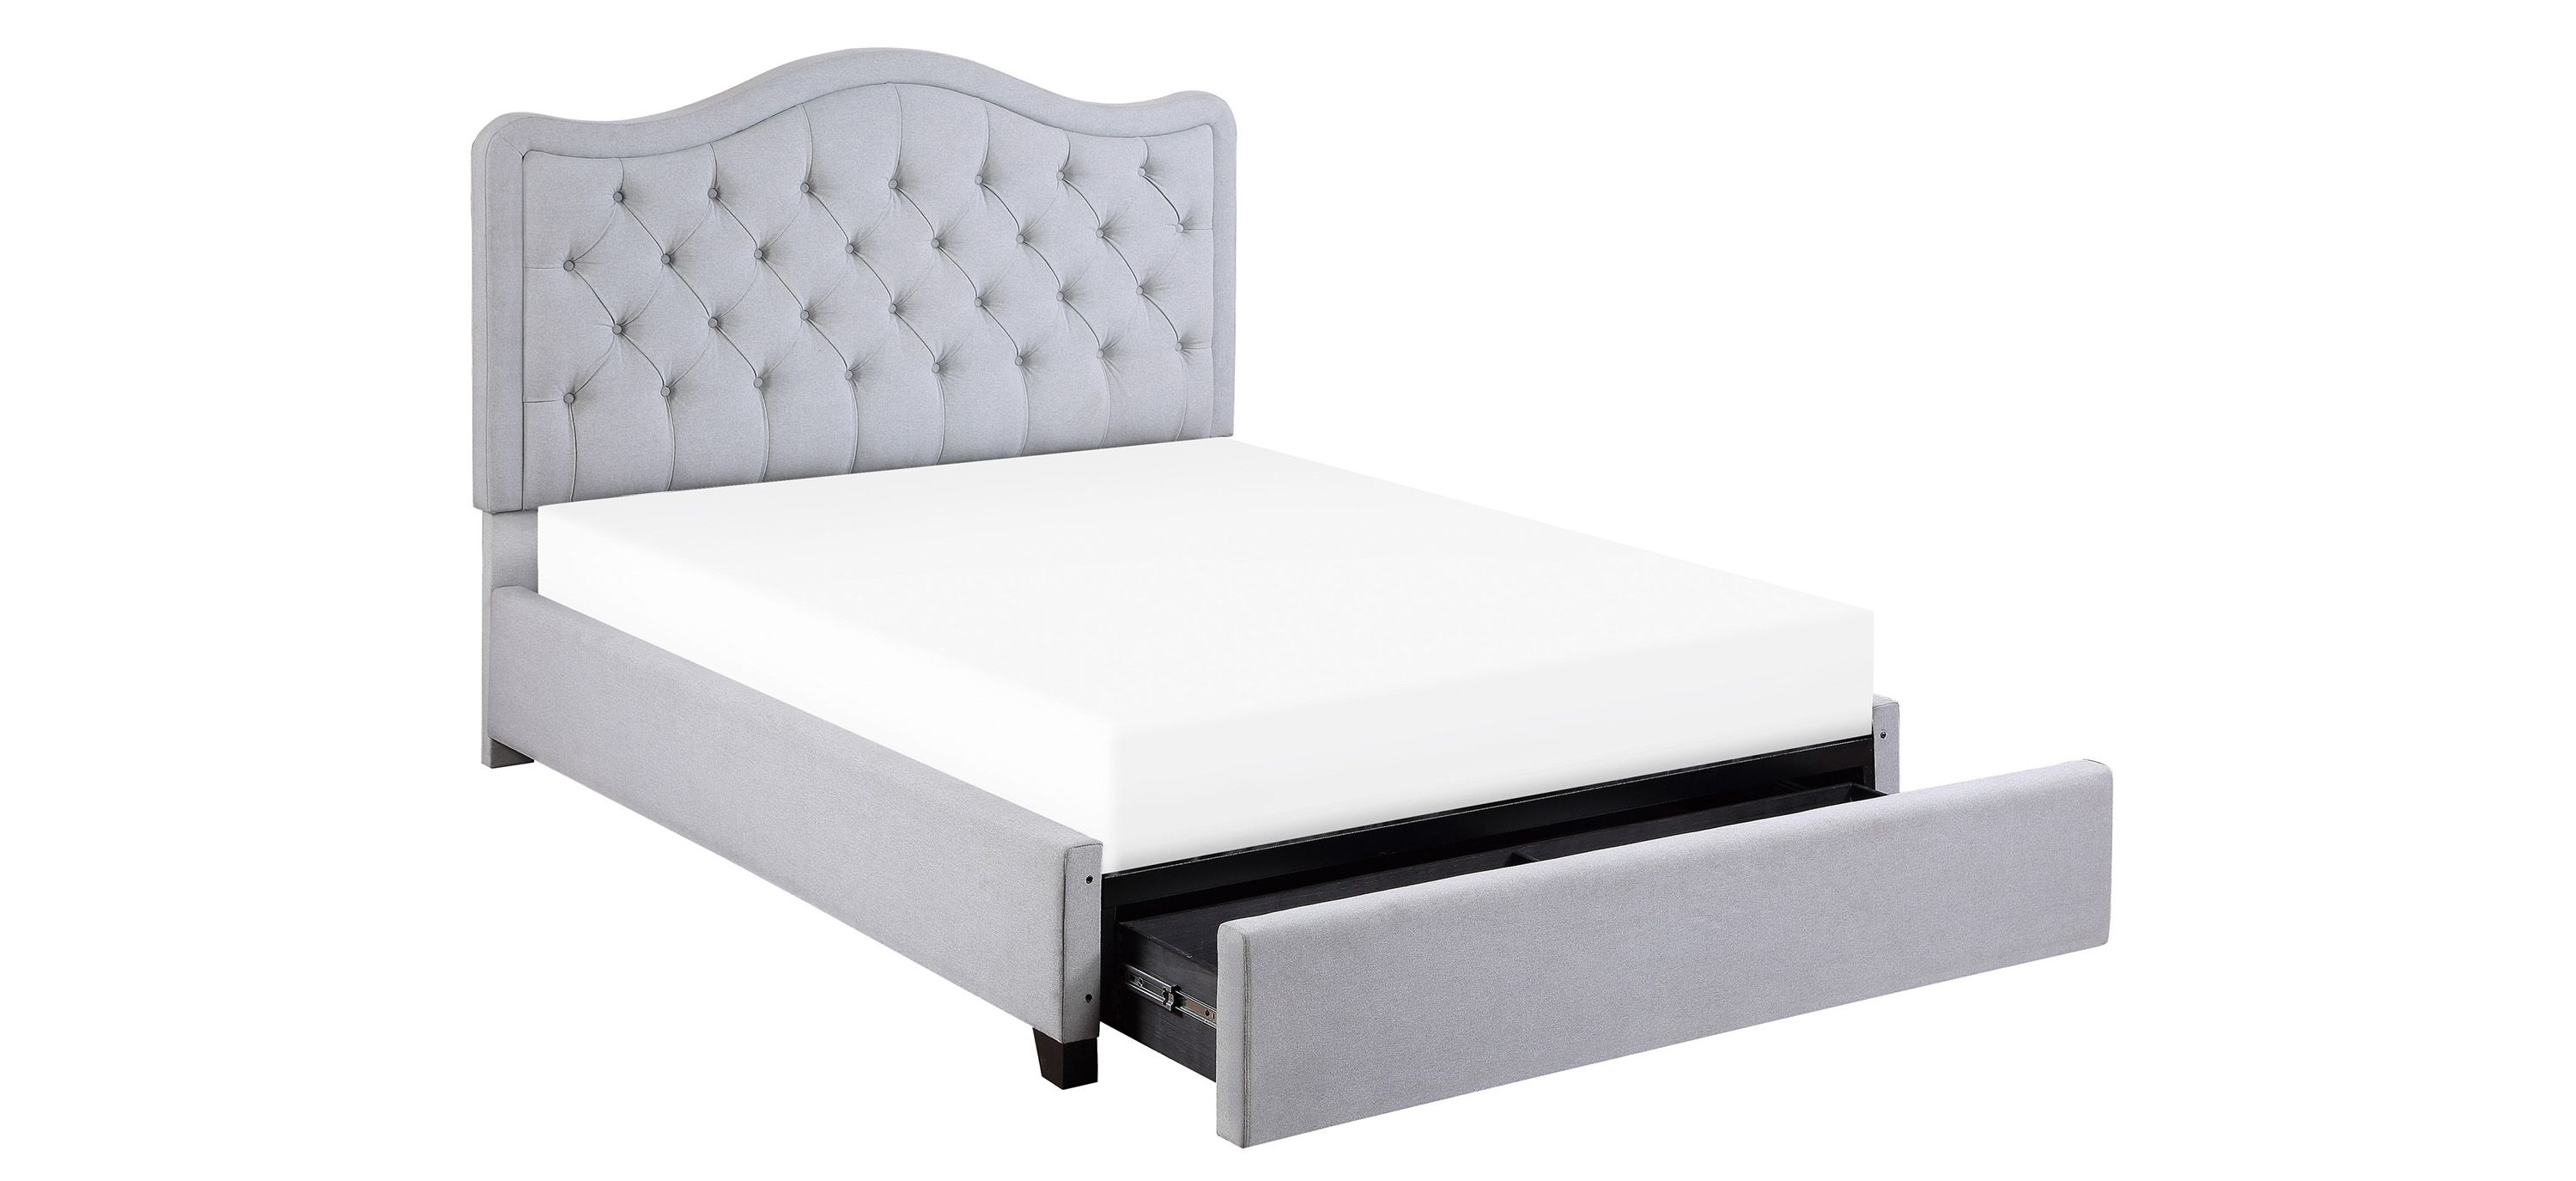 Aitana Platform Upholstered Storage Bed